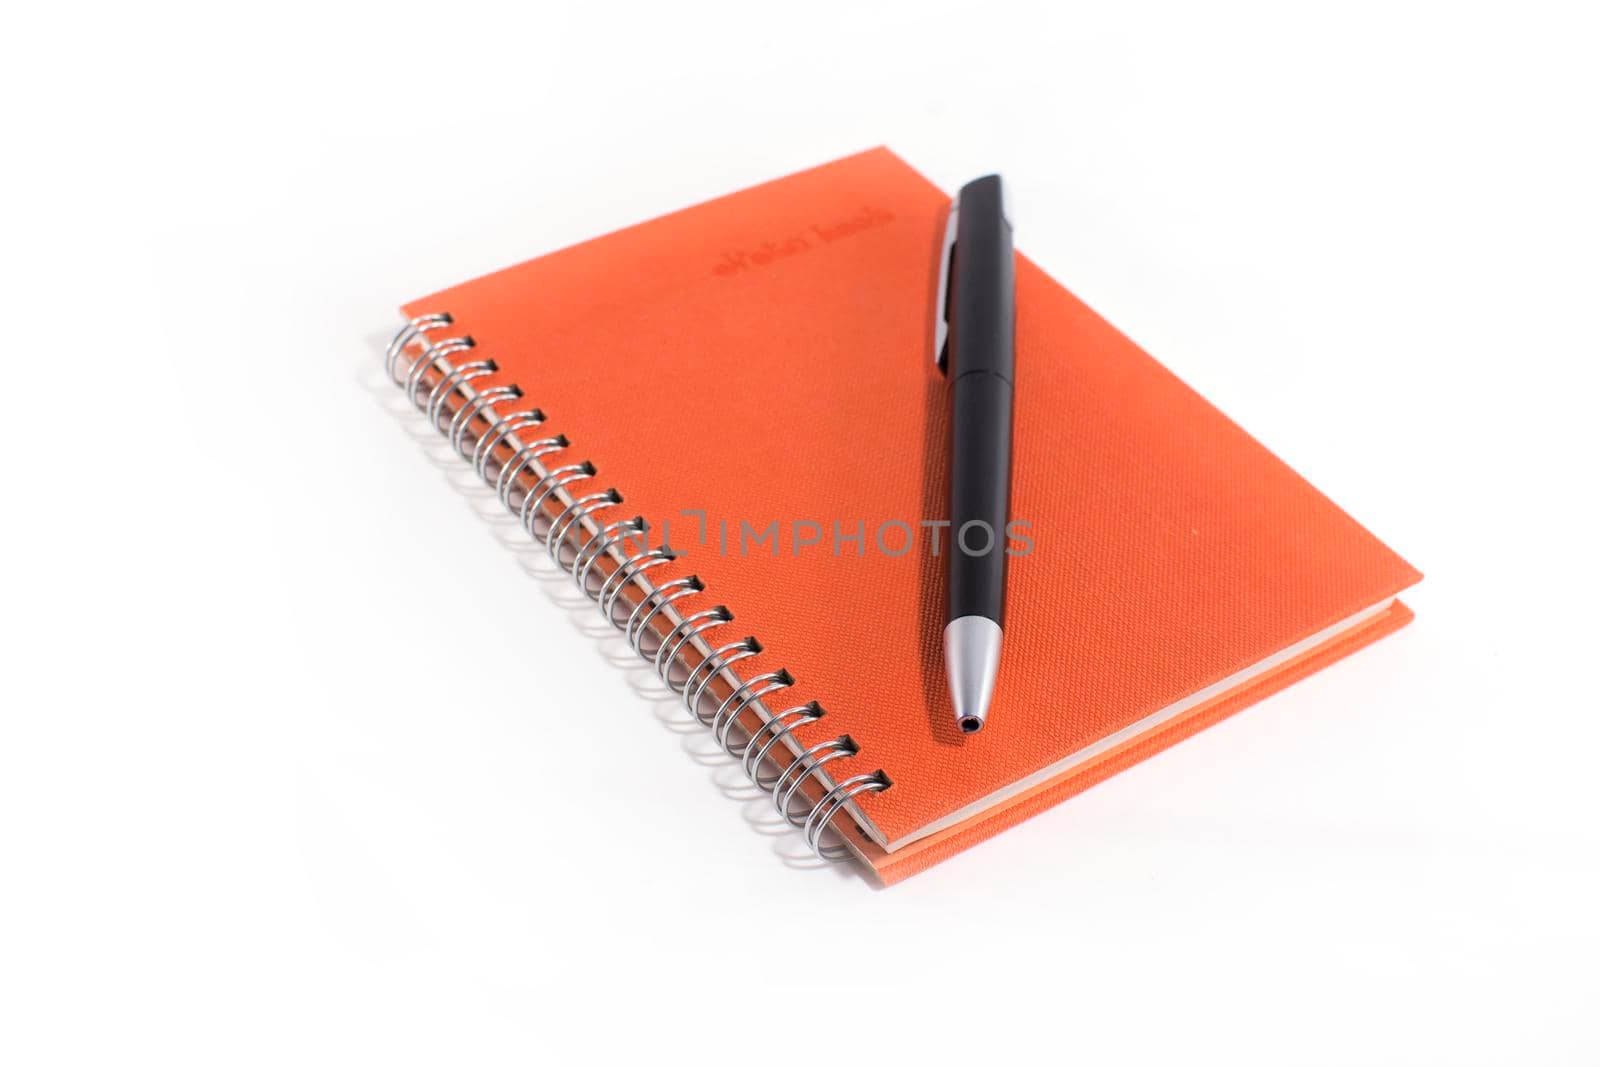 Orange notebook with black pen on white background.